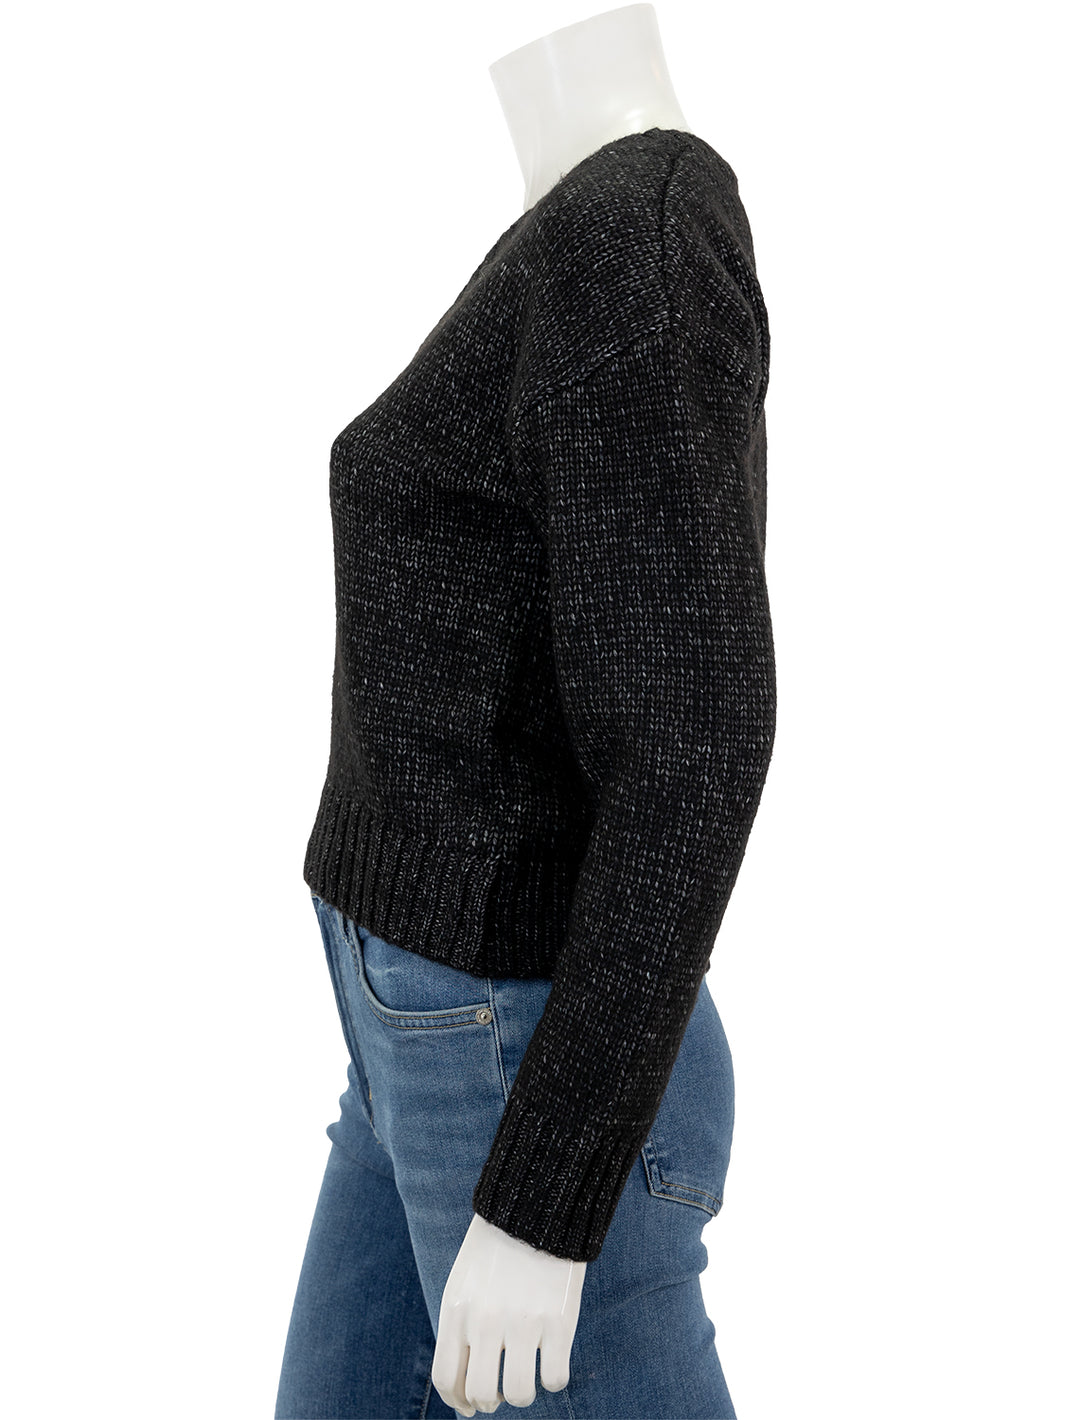 Side view of Steve Madden's houston sweater in black.